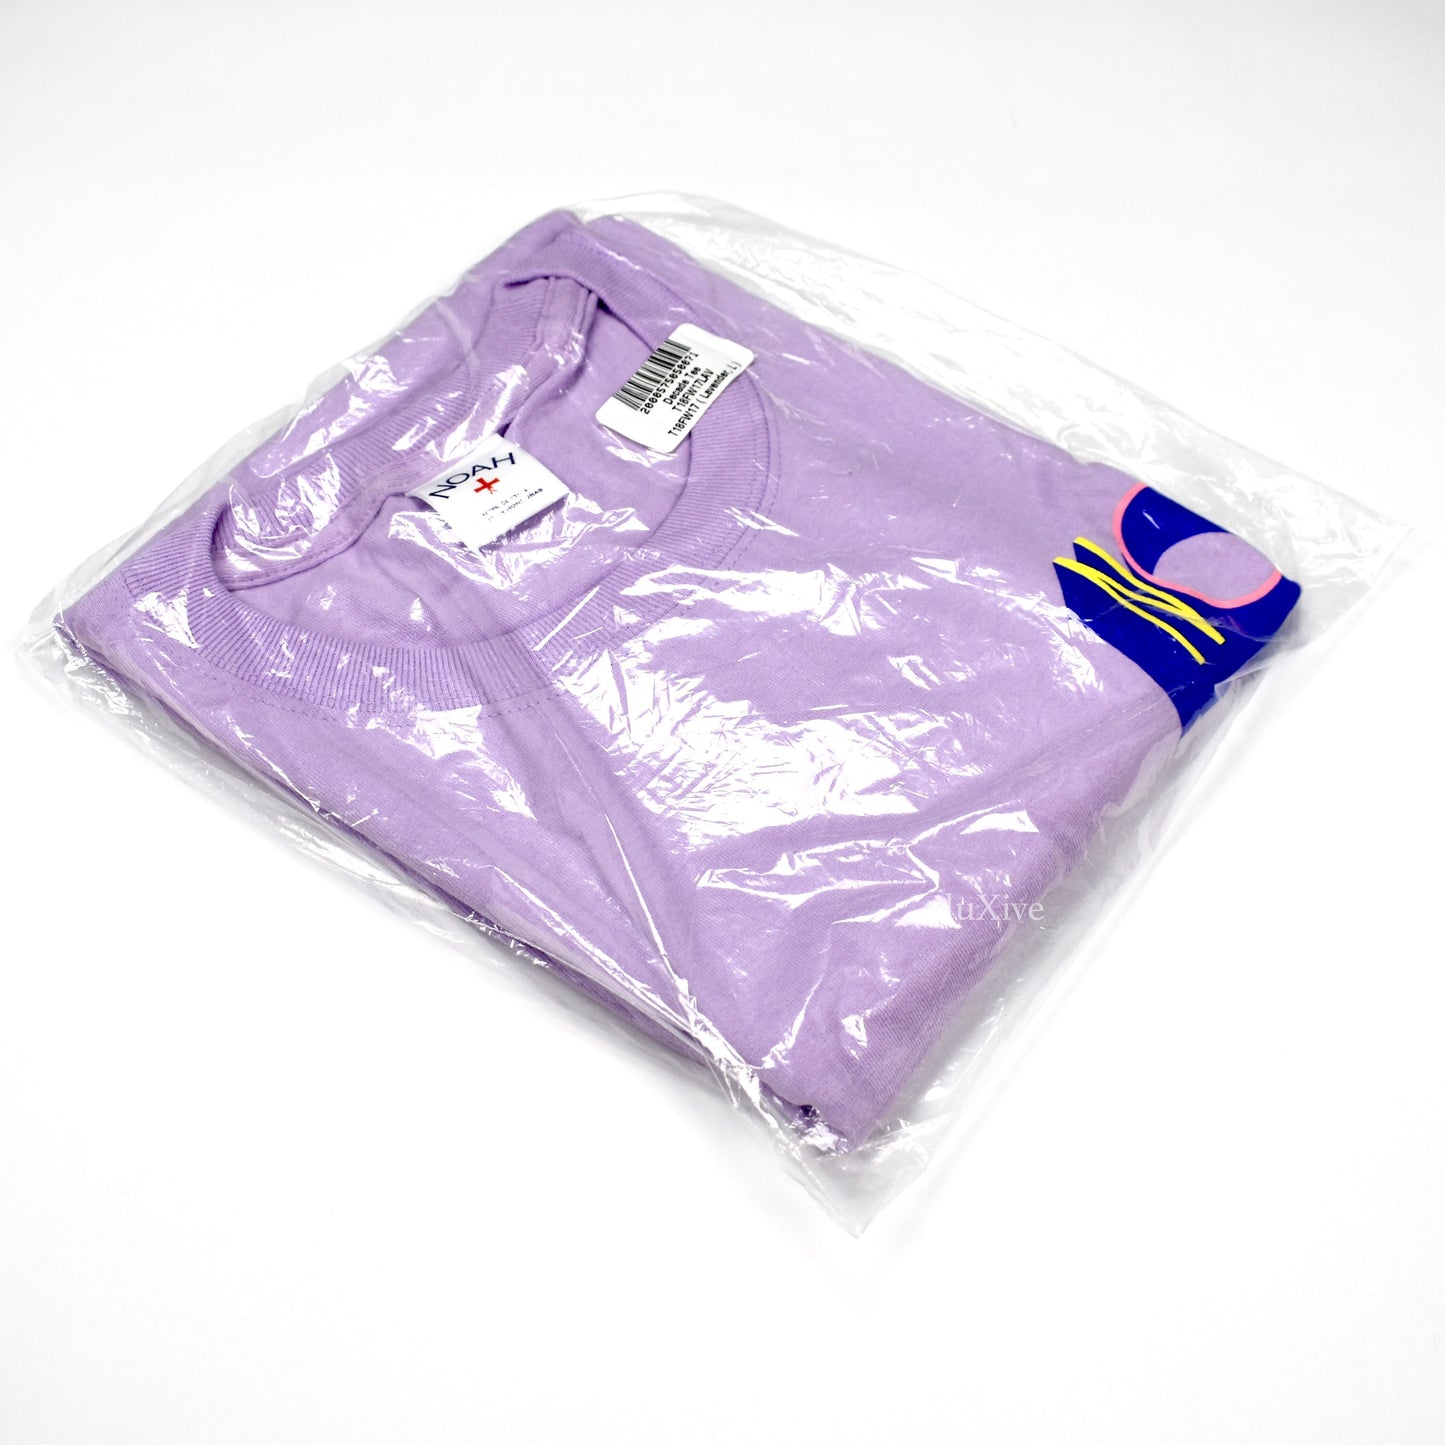 Noah - Lavender Decade Logo T-Shirt